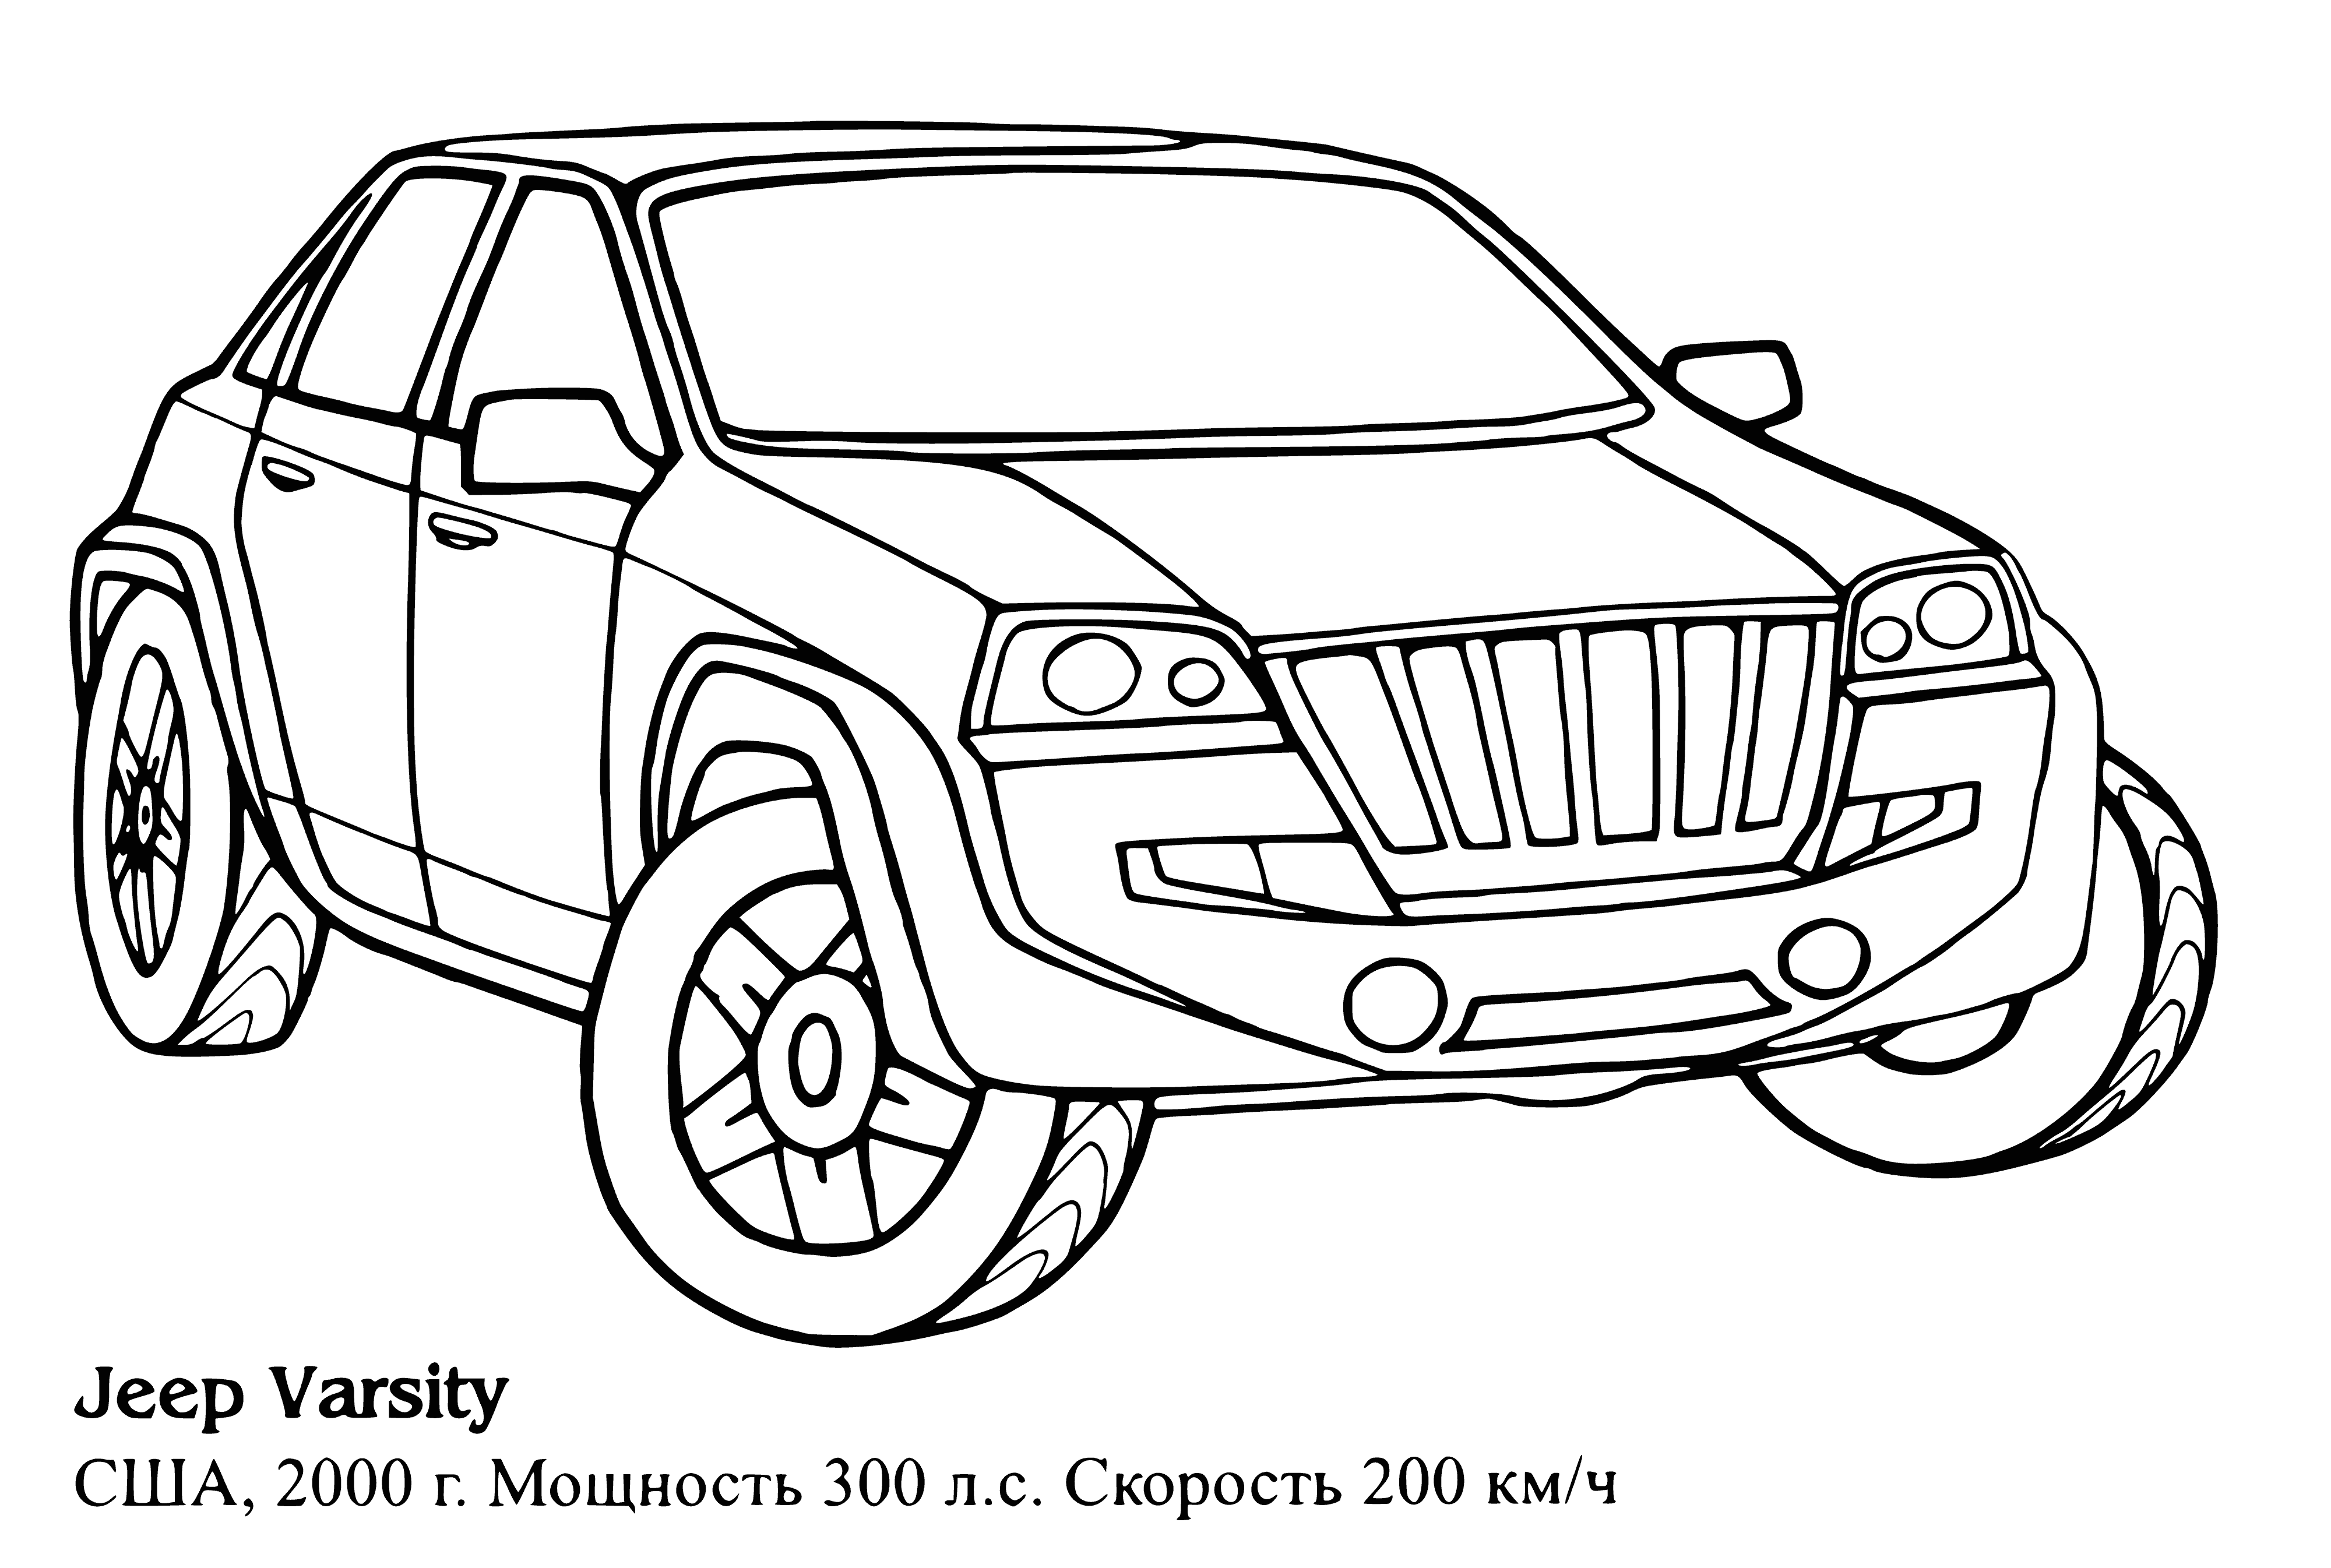 Jeep Varsity kolorowanka